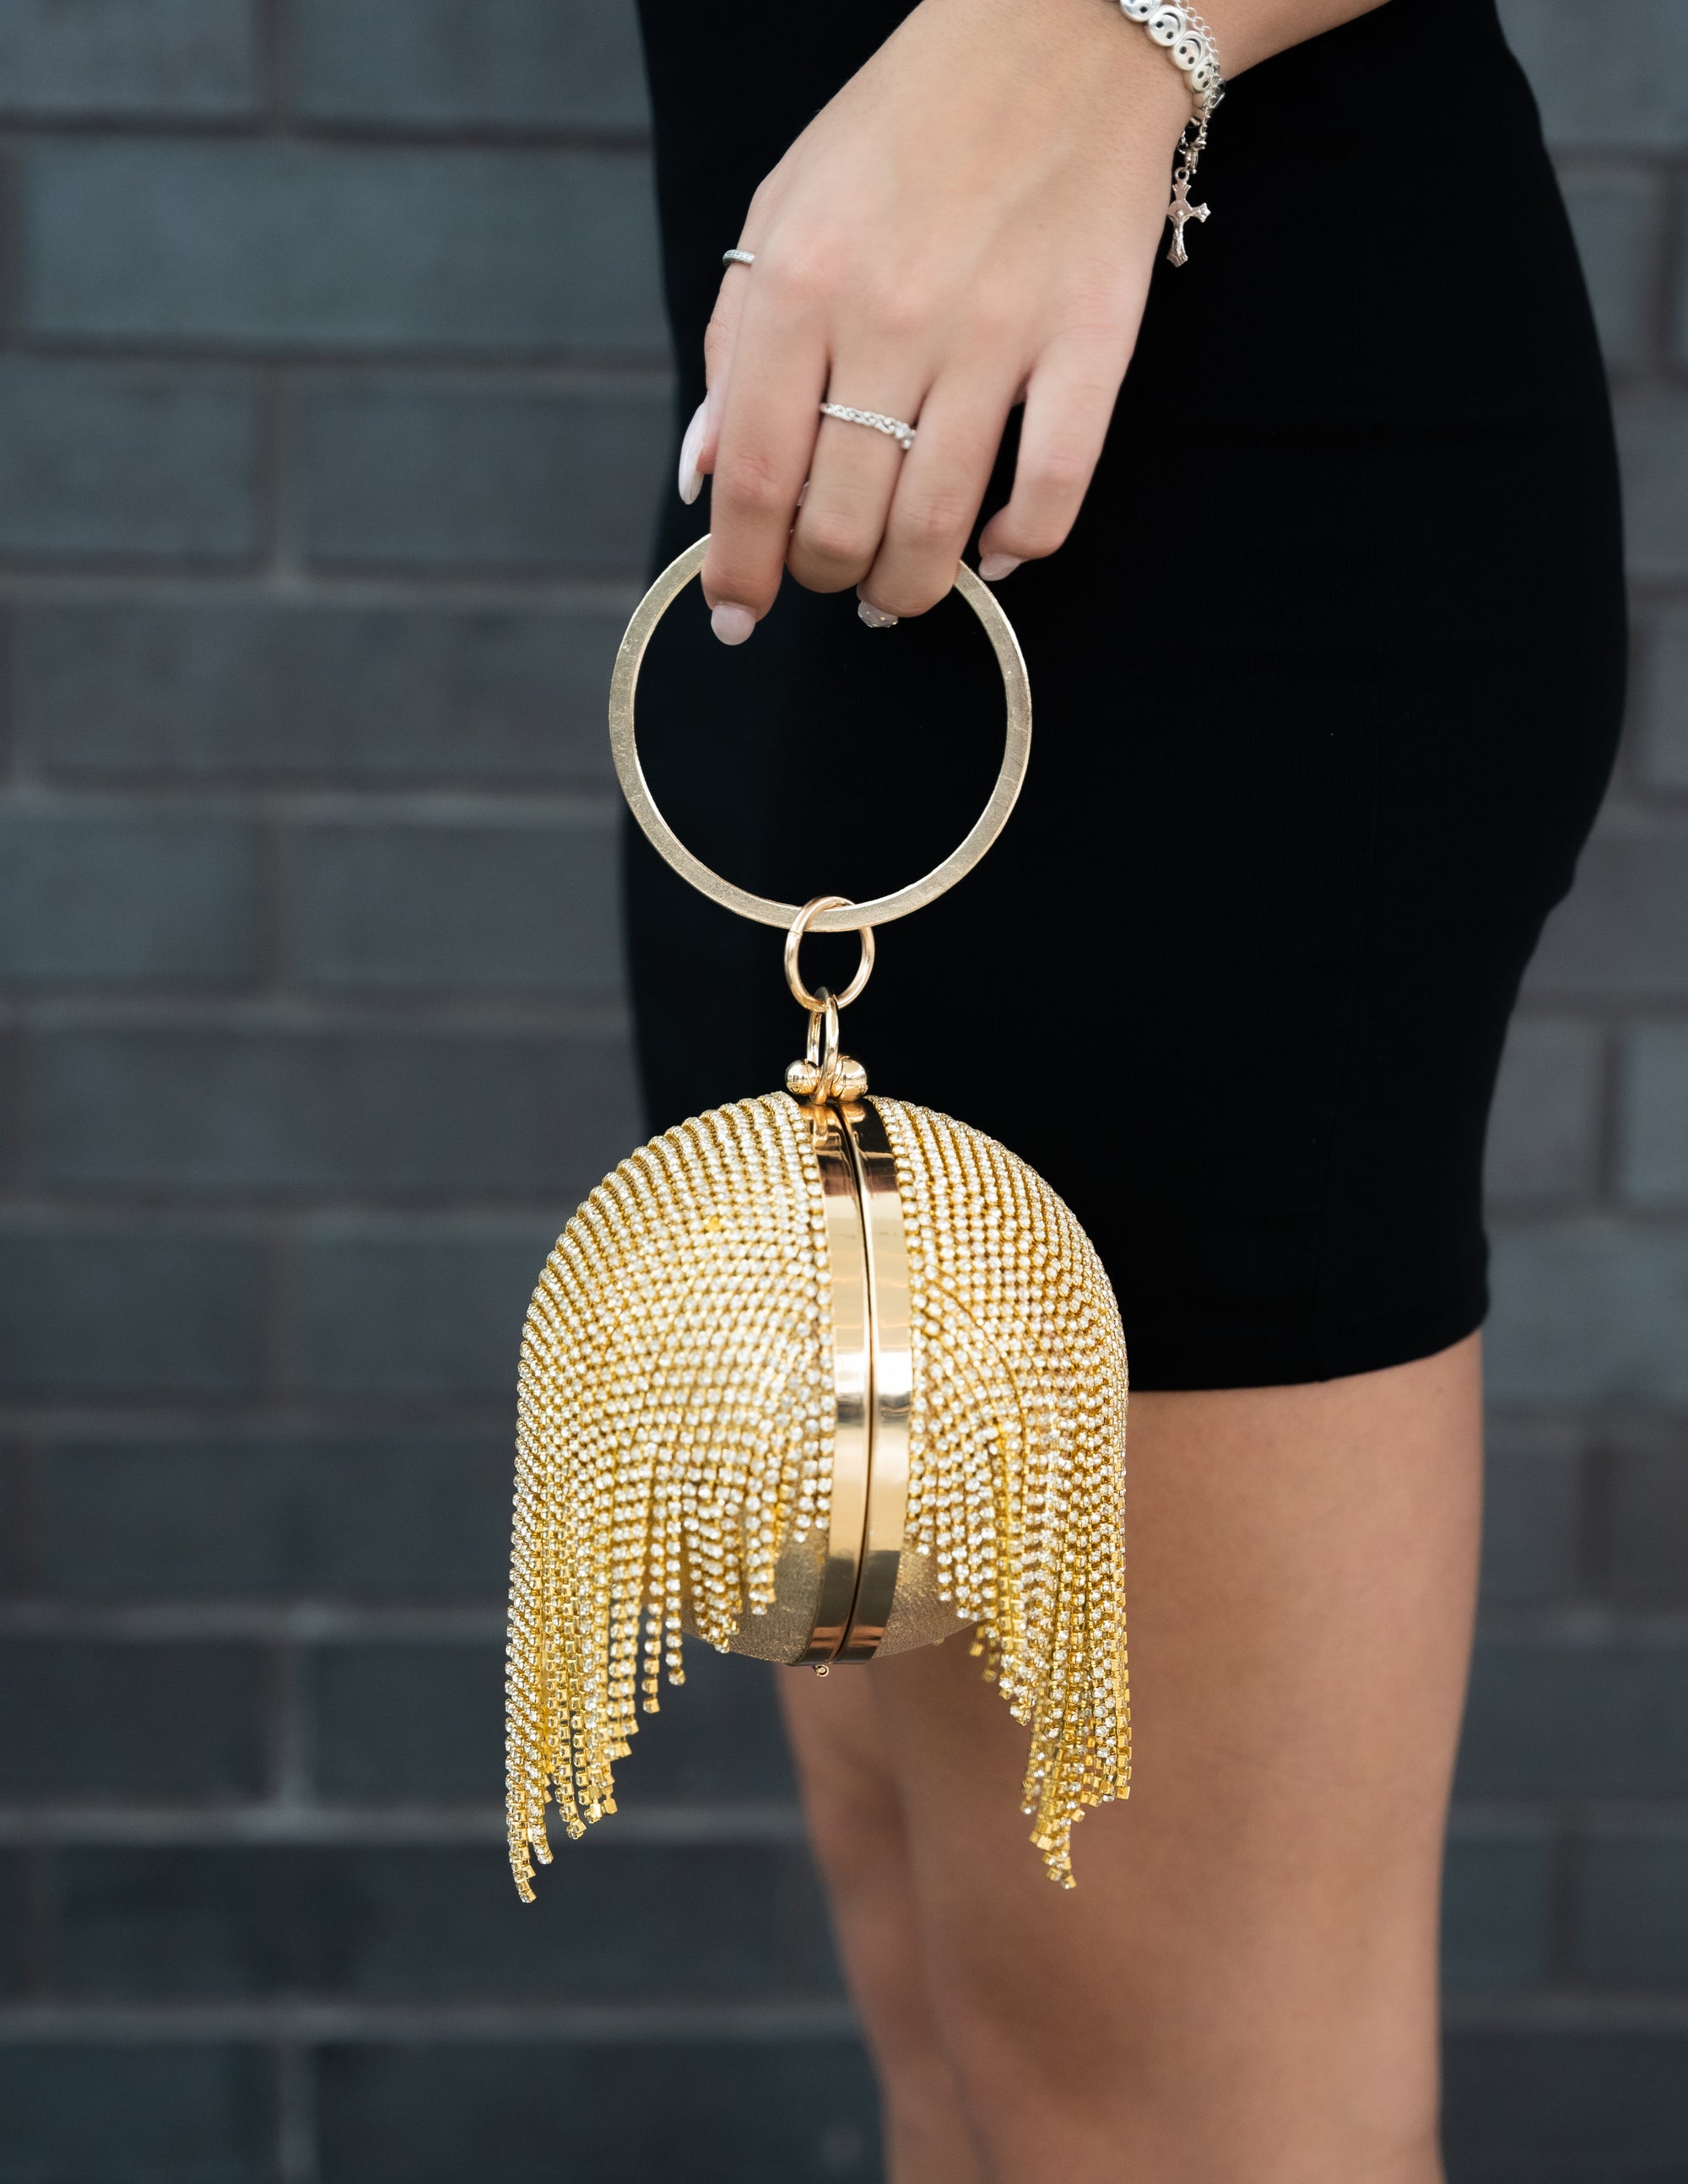 Chanel GWP Gold Ball Shaped Clutch Bag | Chanel clutch bag, Chanel clutch,  Chanel tote bag